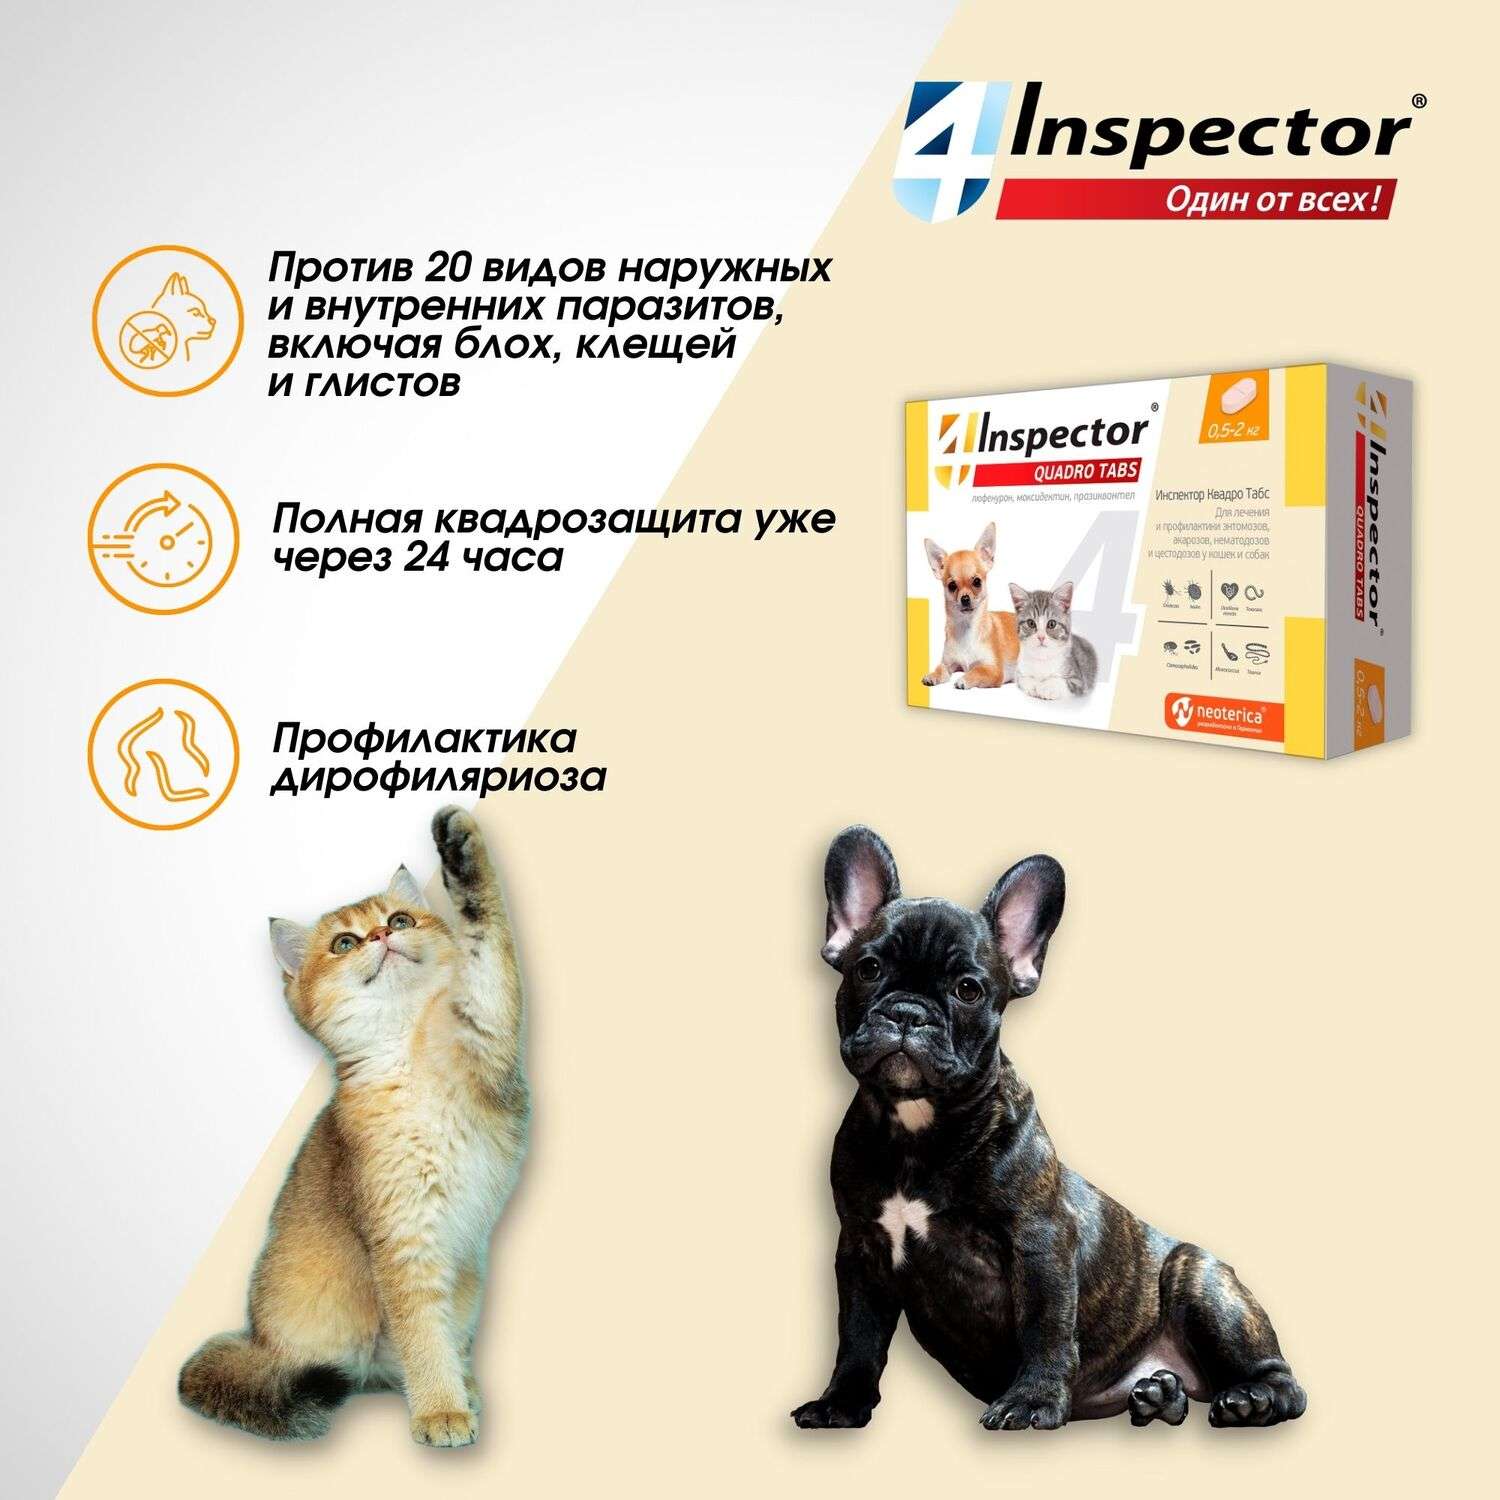 Inspector Quadro таблетки для собак 2-8 кг. Таблетки от клещей для собак инспектор. Таблетки для глистов инспектор для собак. Таблетки и от блох и от глистов для собак.